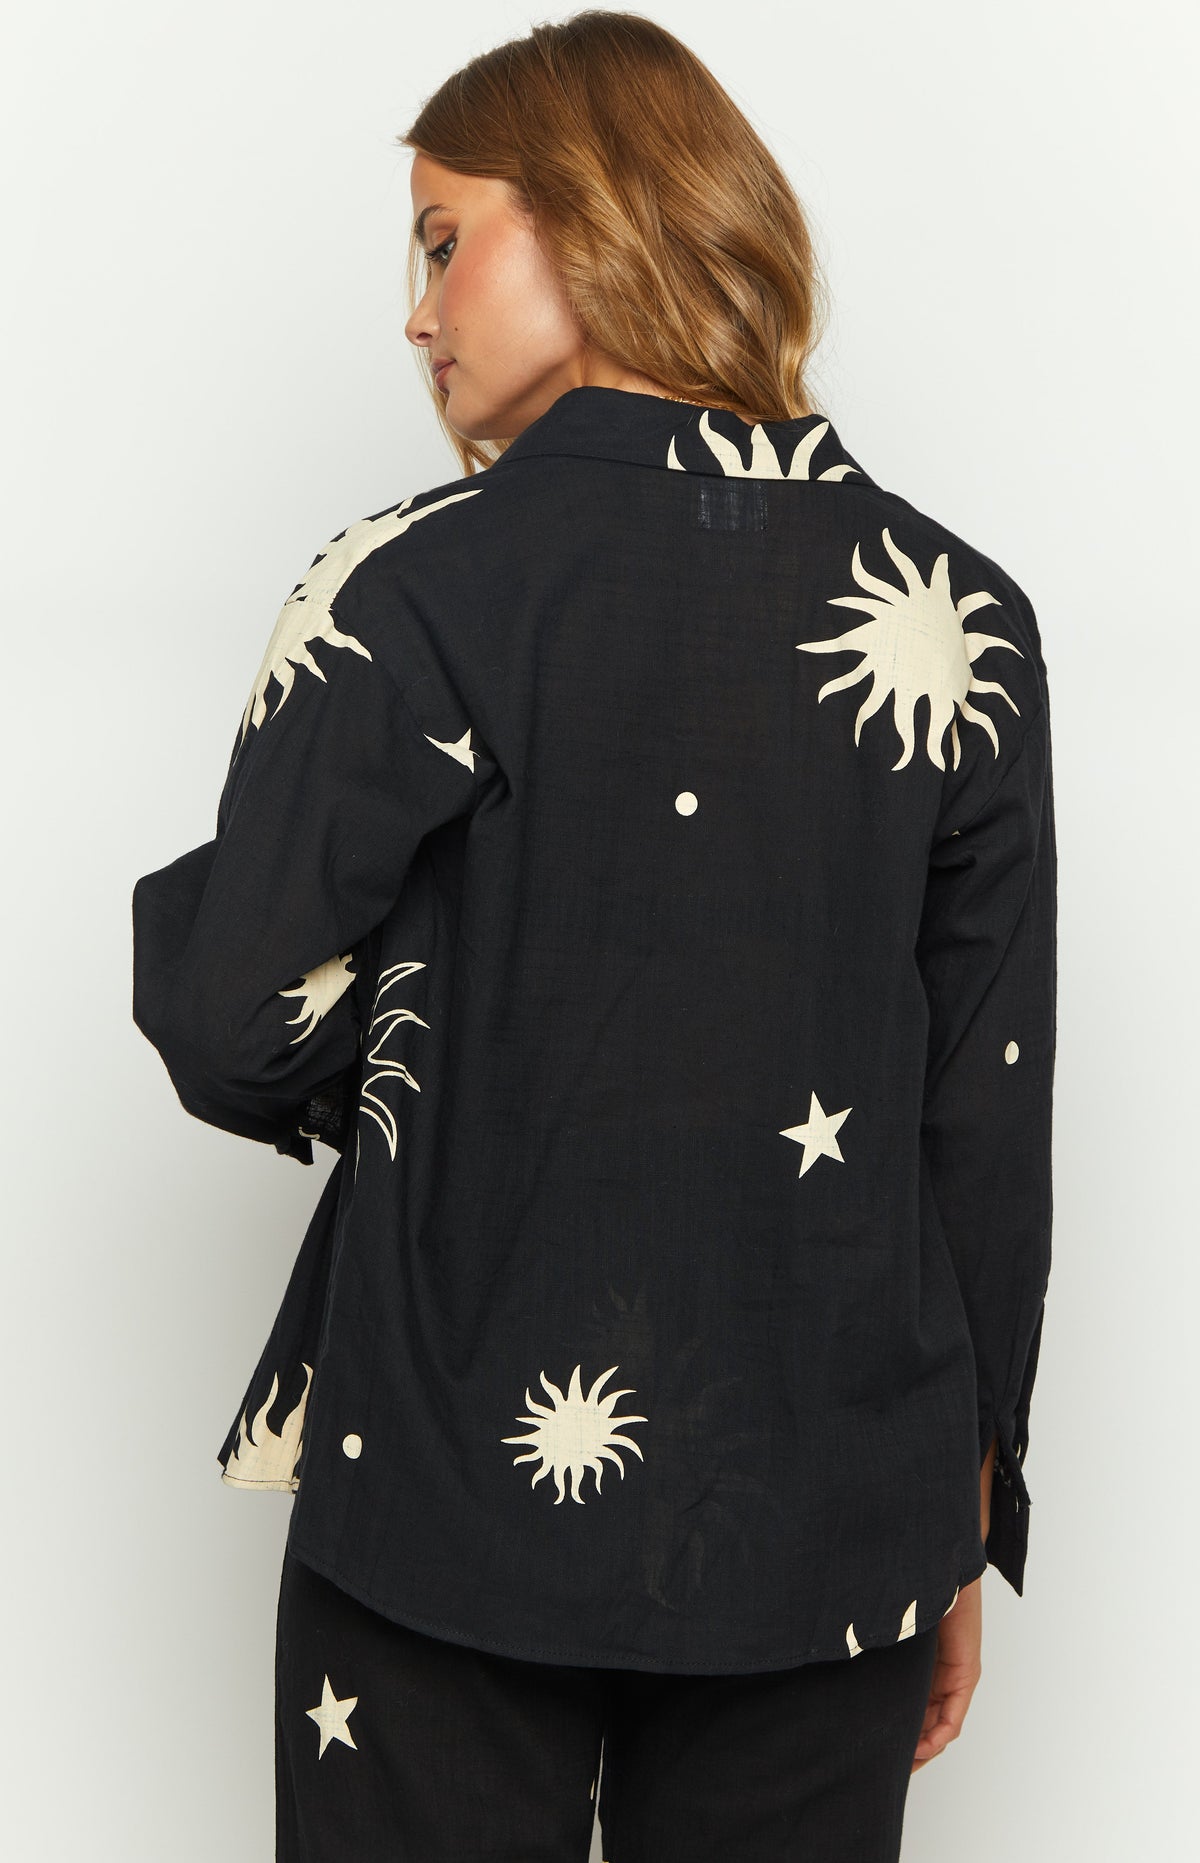 Stellar Black Long Sleeve Shirt Image